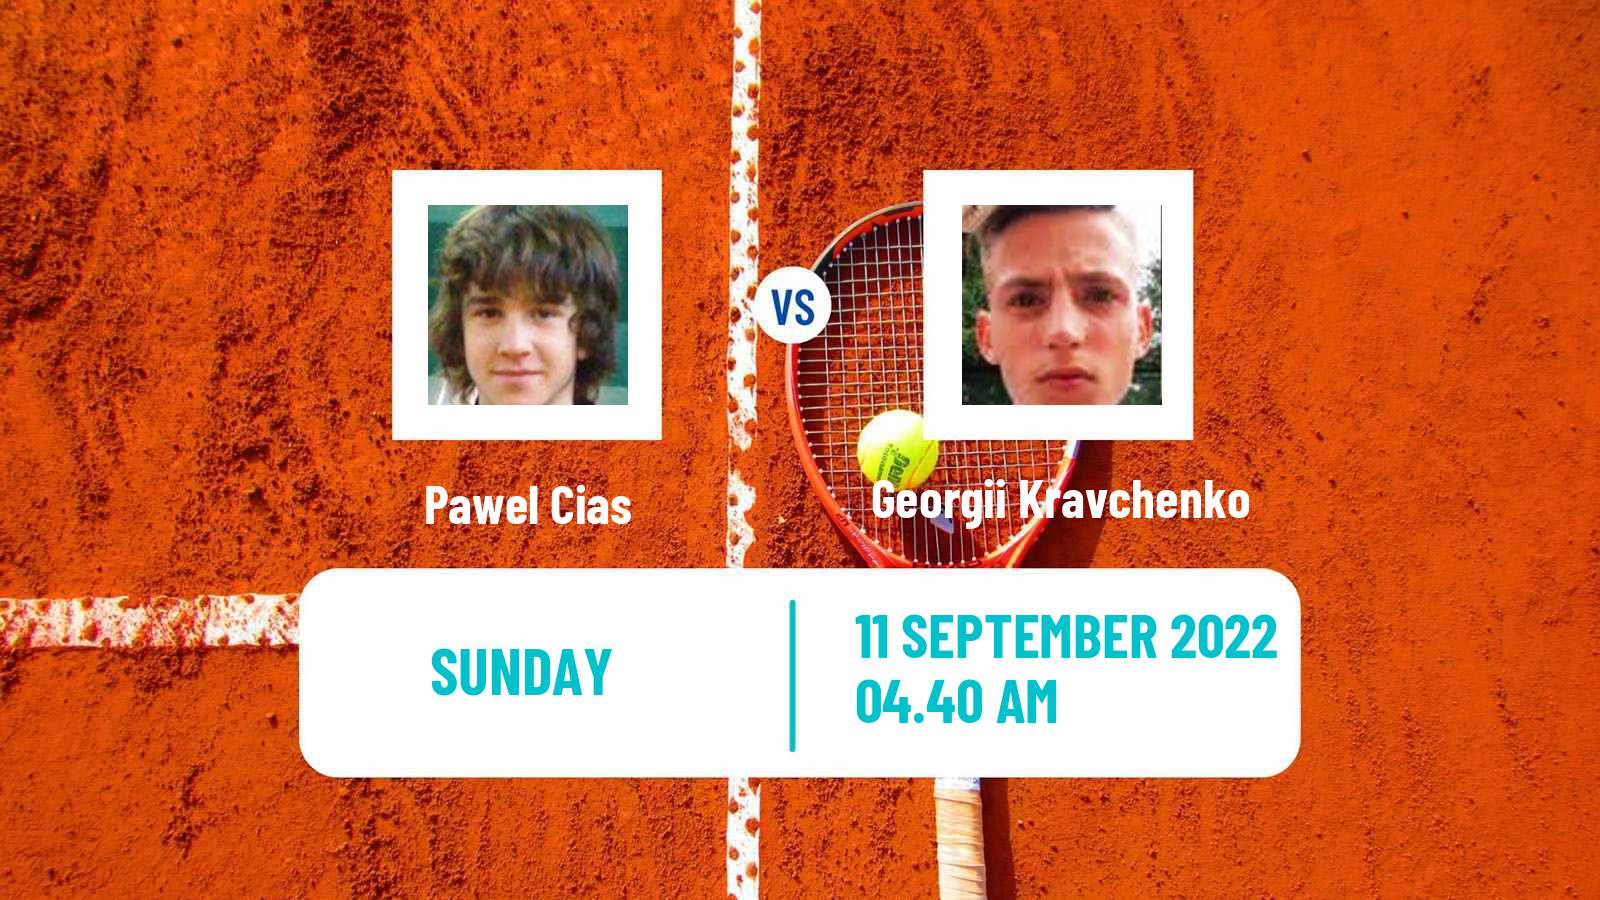 Tennis ATP Challenger Pawel Cias - Georgii Kravchenko